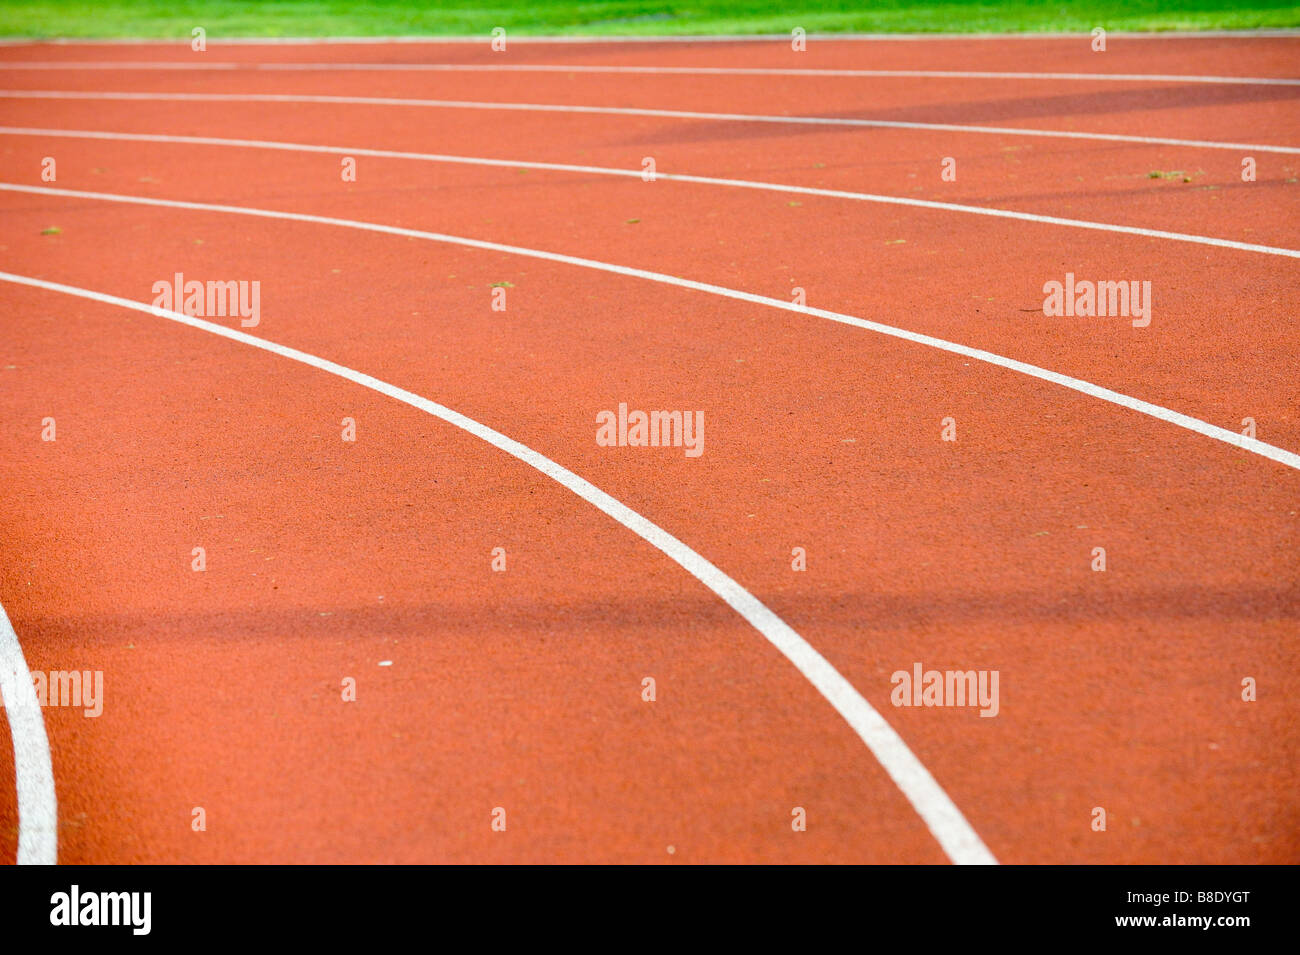 lanes on athletics track Stock Photo